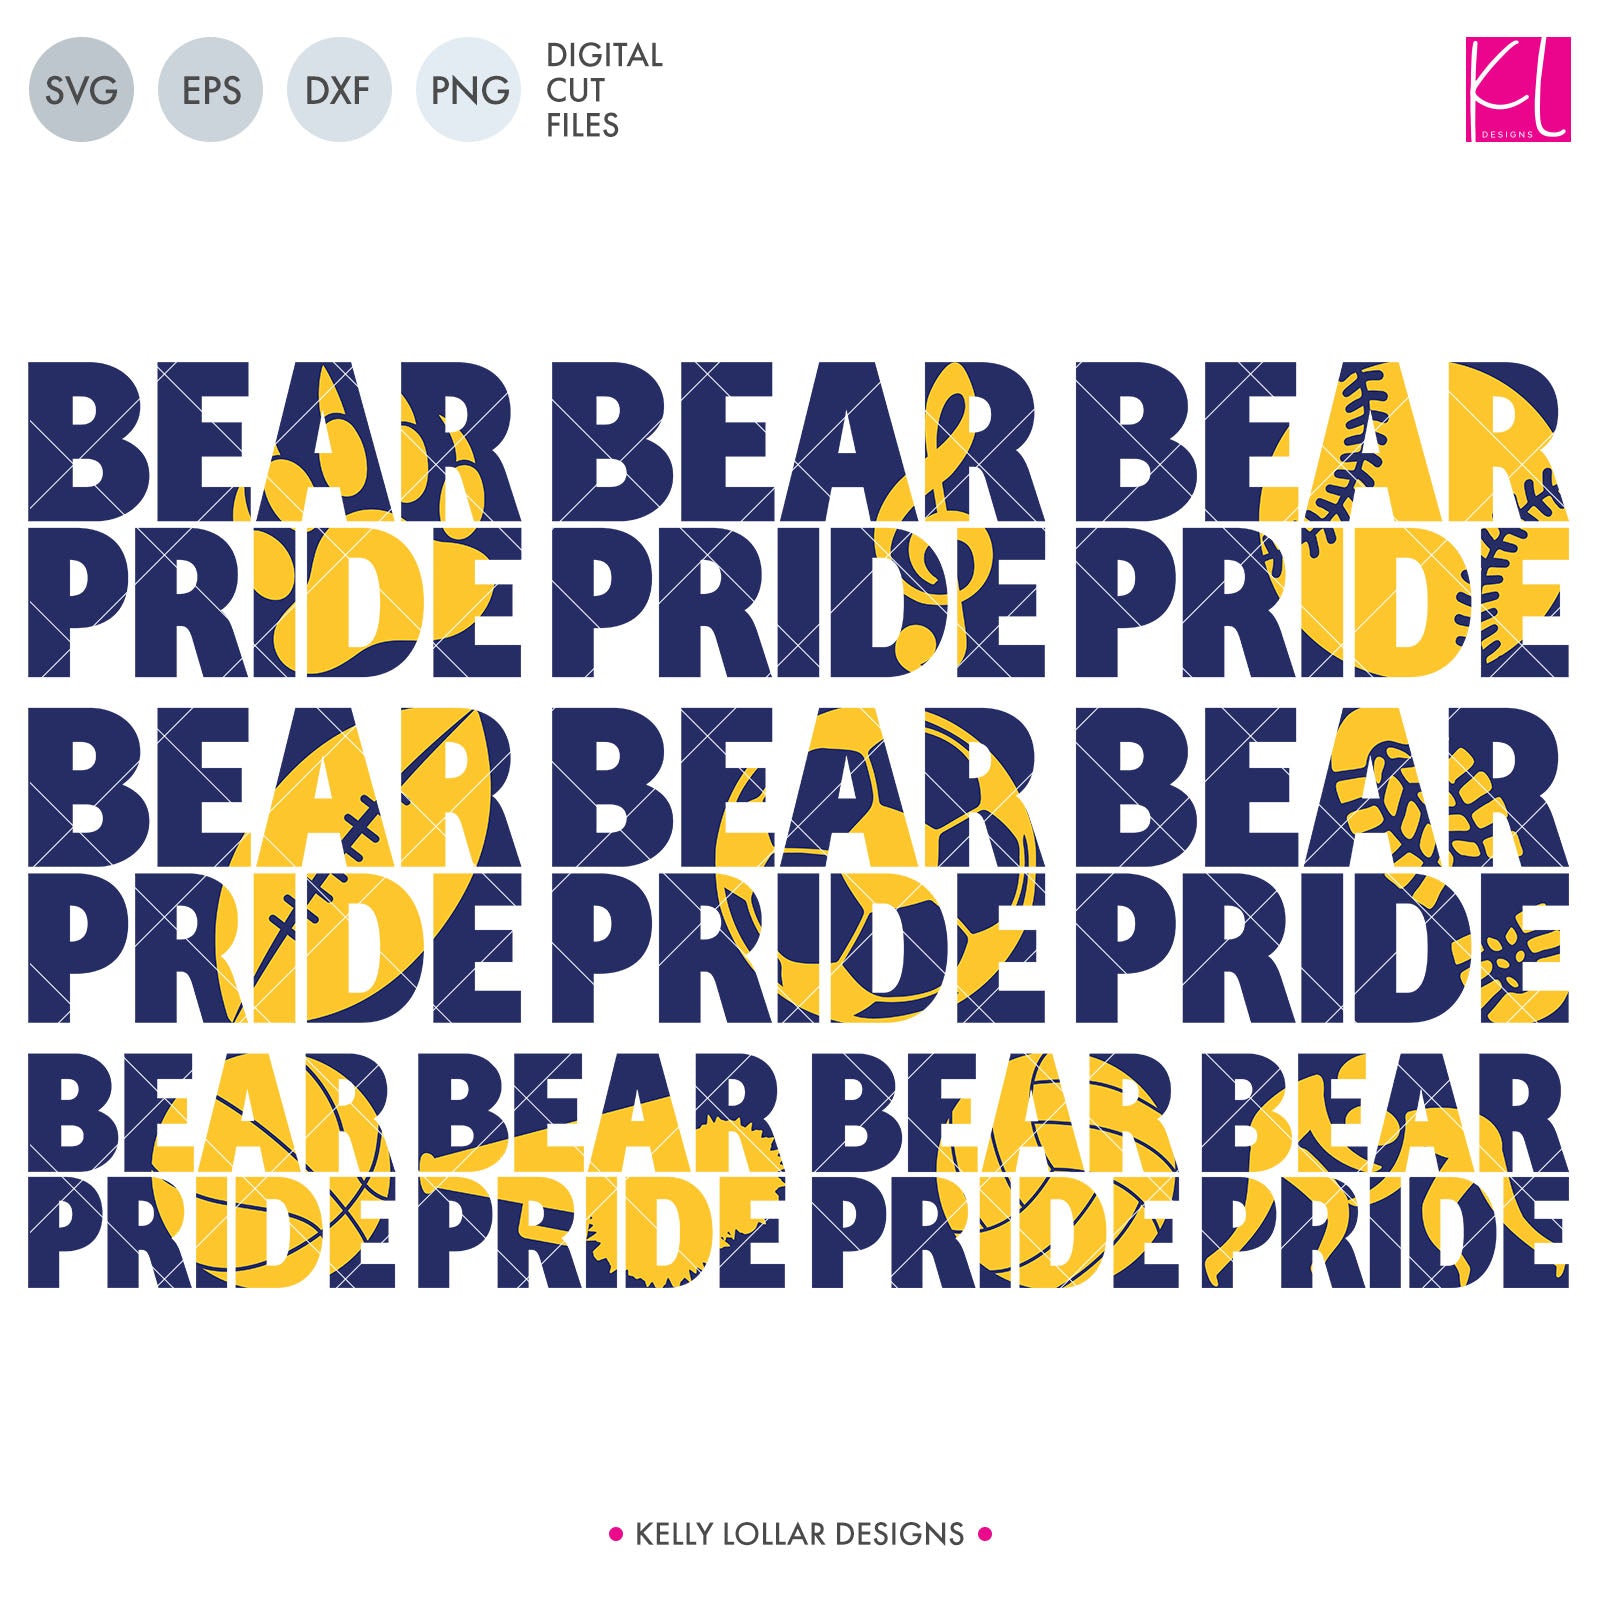 Teddy Bear SVG Designs Bundle – MasterBundles